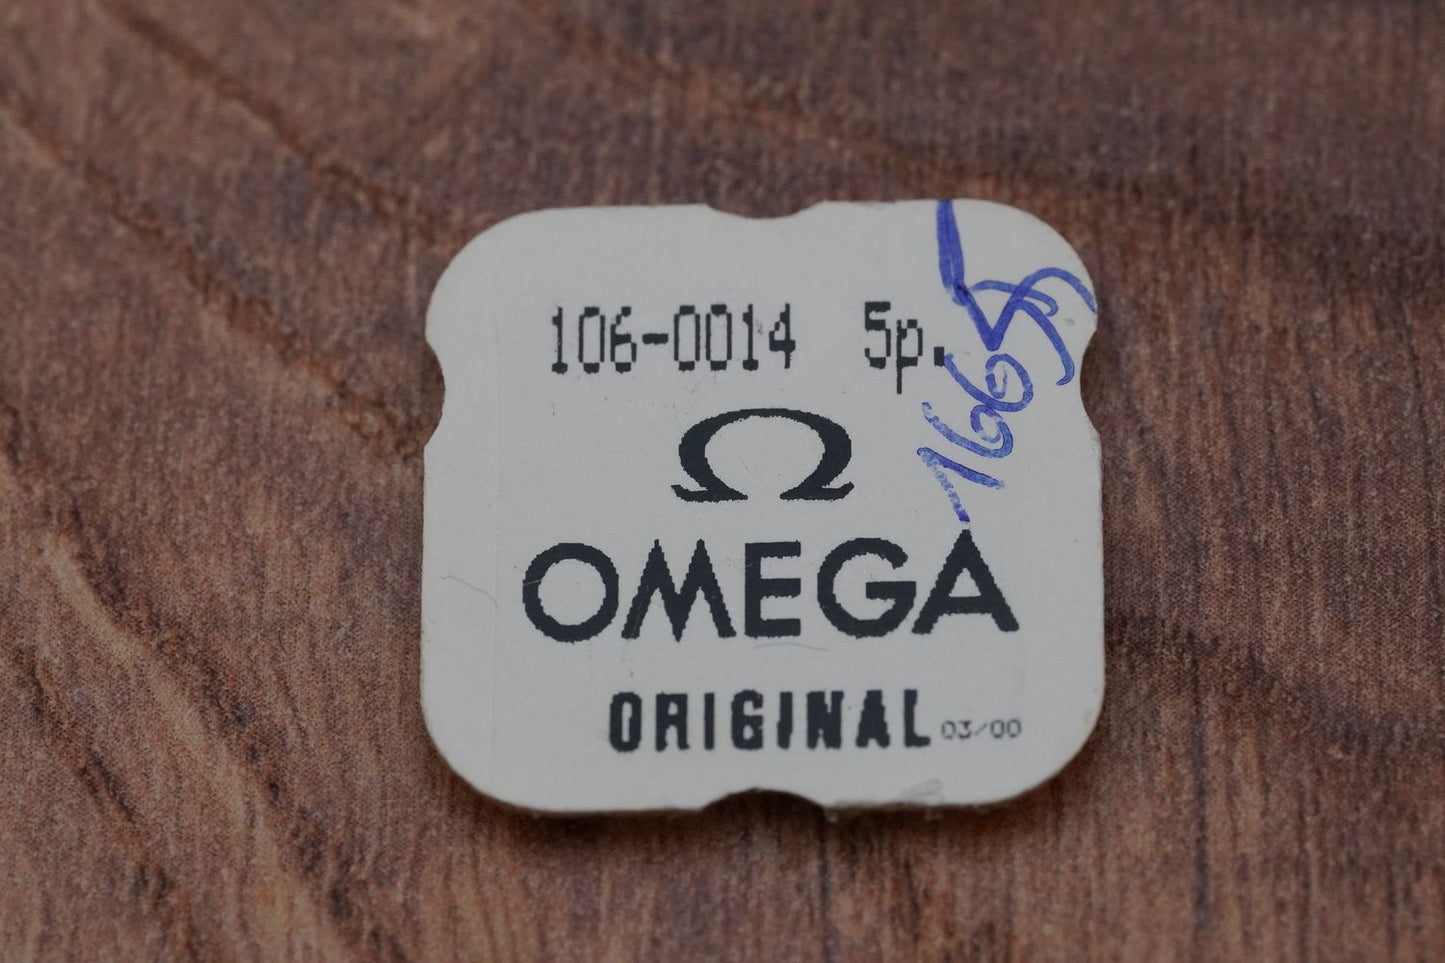 Omega case clamp 106-0014